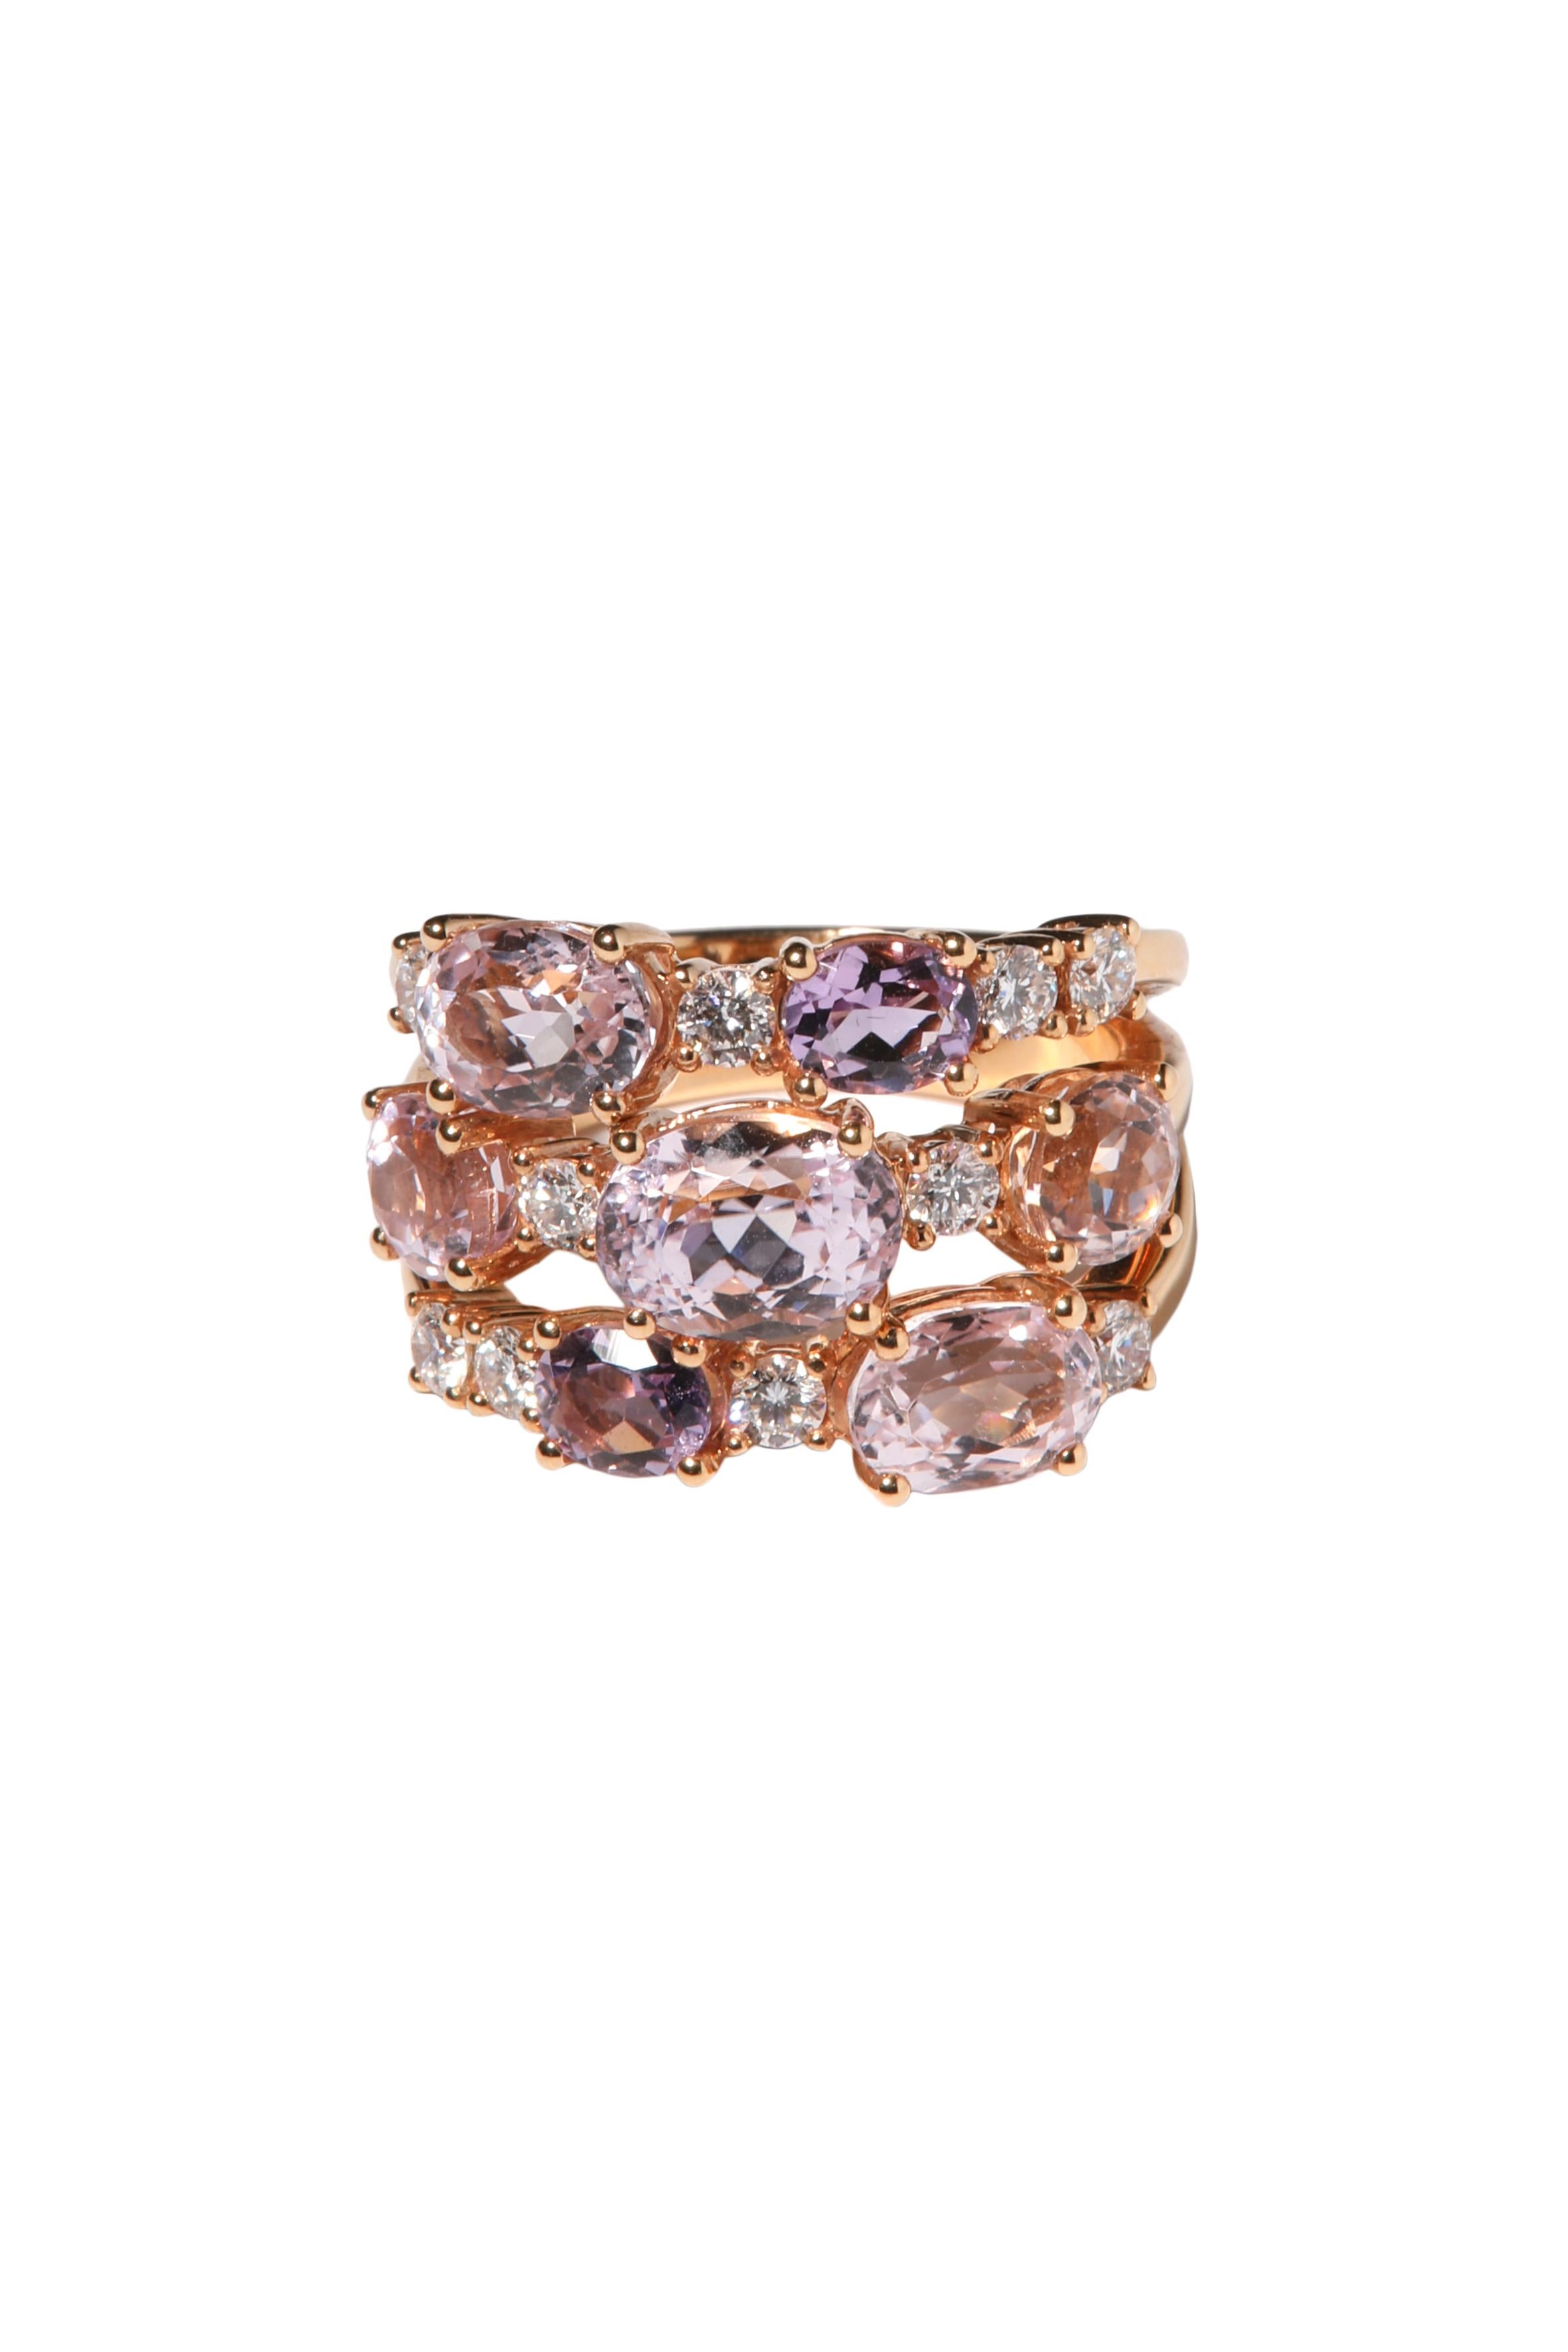 Oval Cut 18 Karat Pink Gold Ring with Amethyst, Kunzite and Diamonds